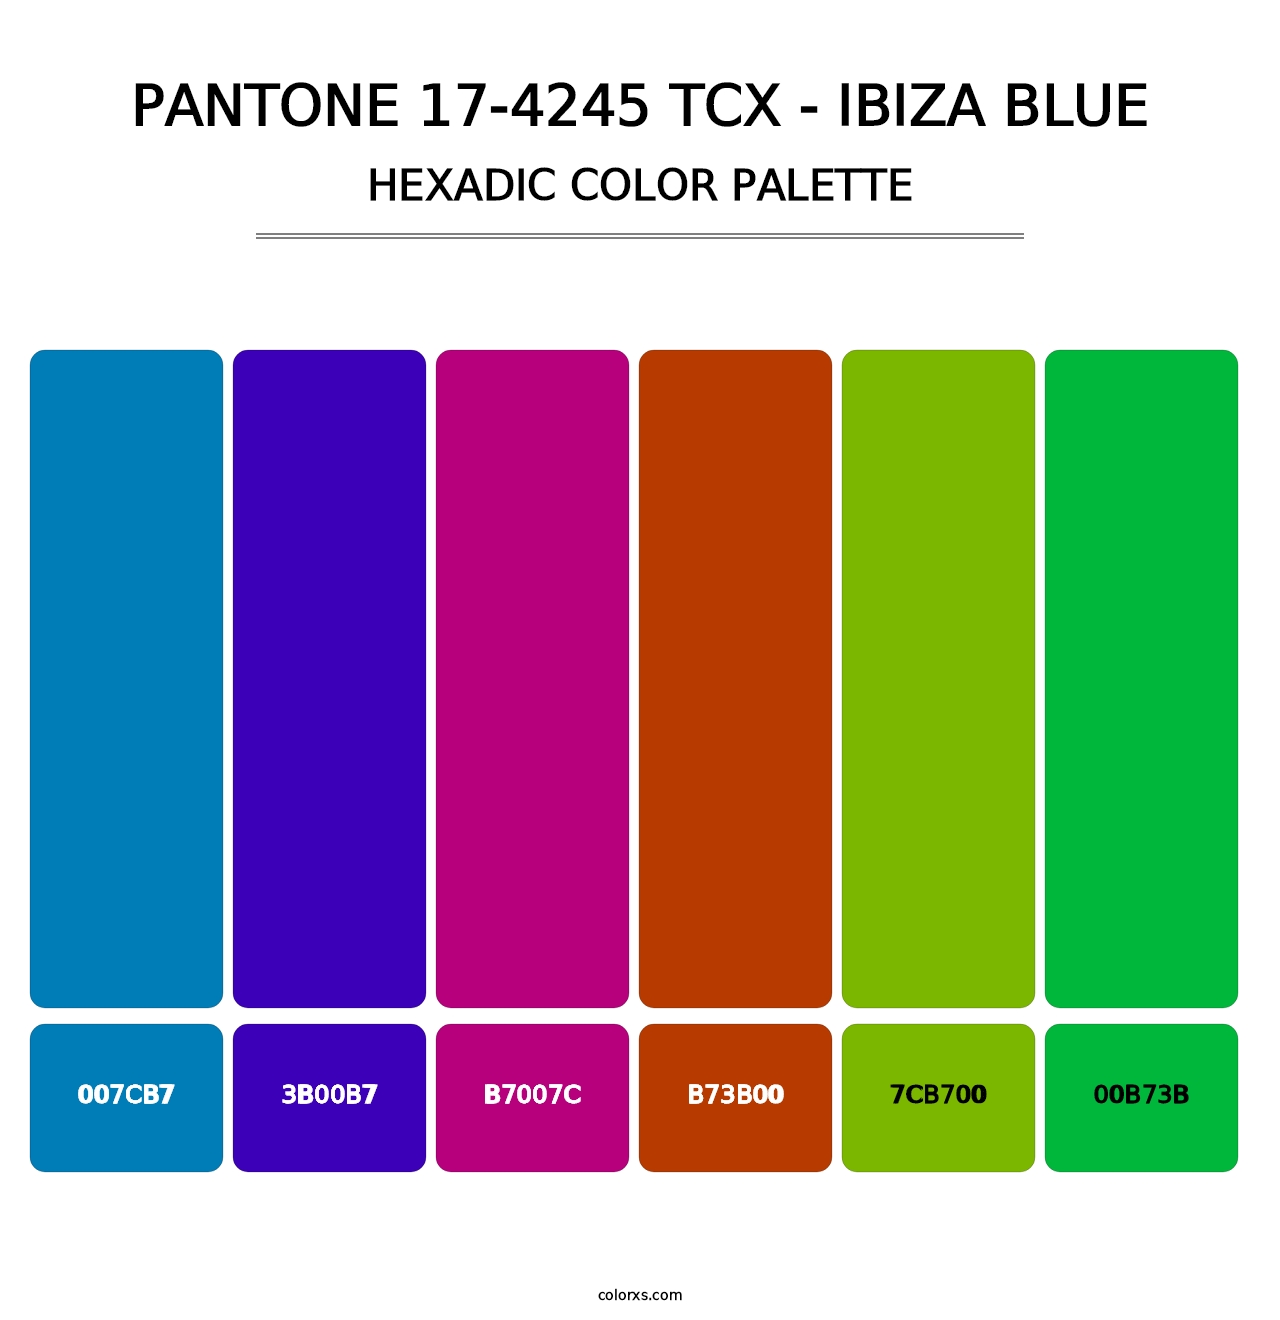 PANTONE 17-4245 TCX - Ibiza Blue - Hexadic Color Palette